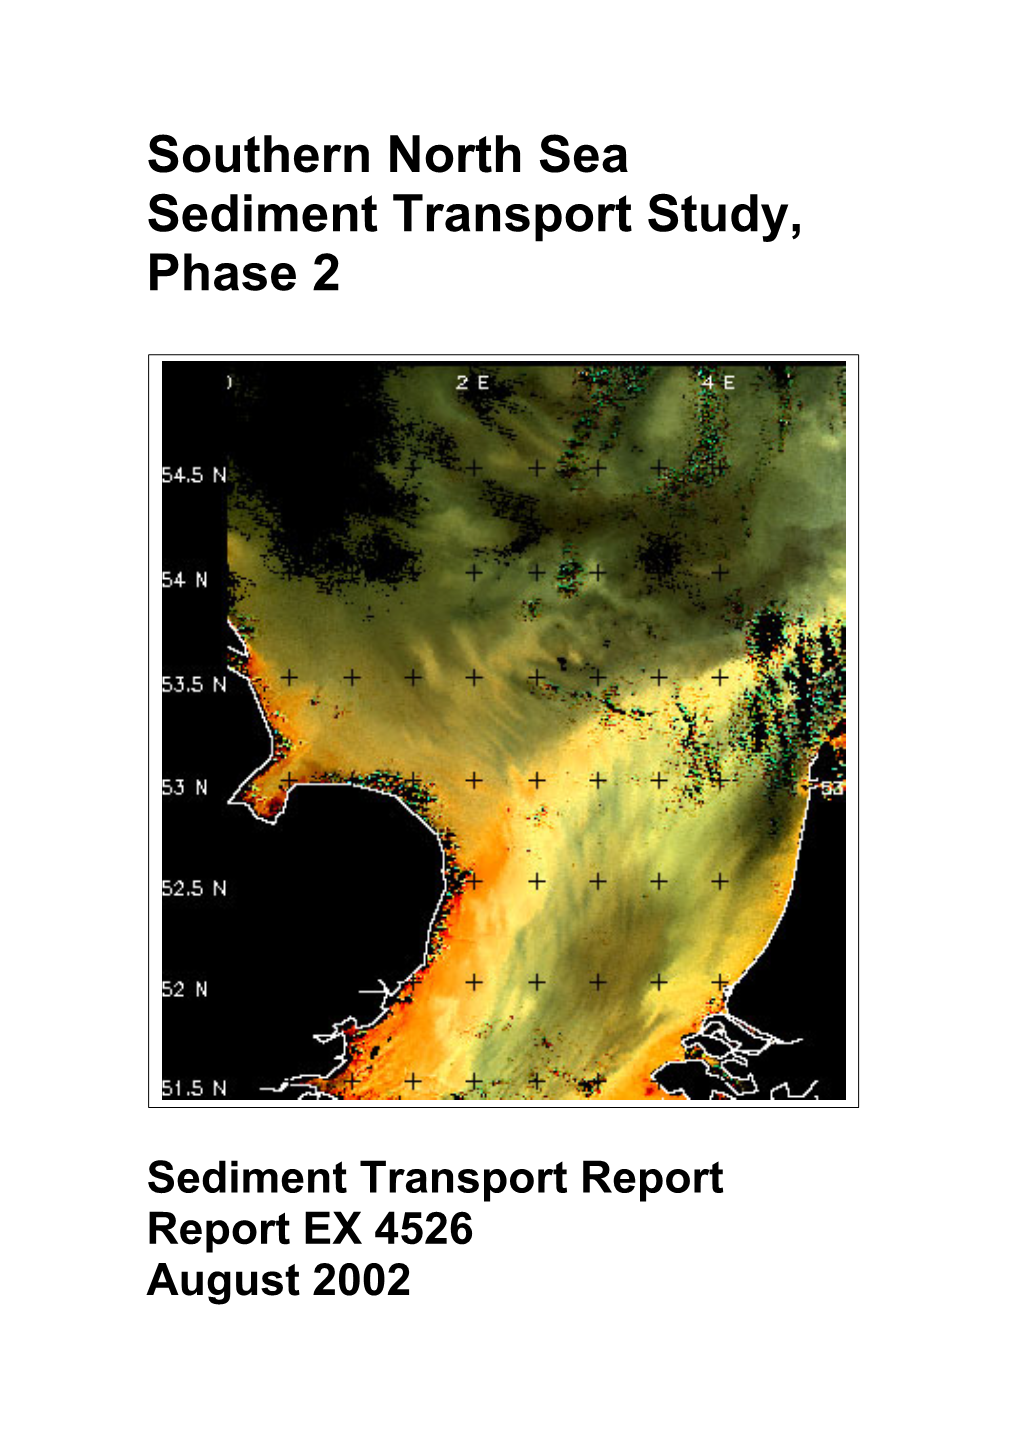 Southern North Sea Sediment Transport Study, Phase 2